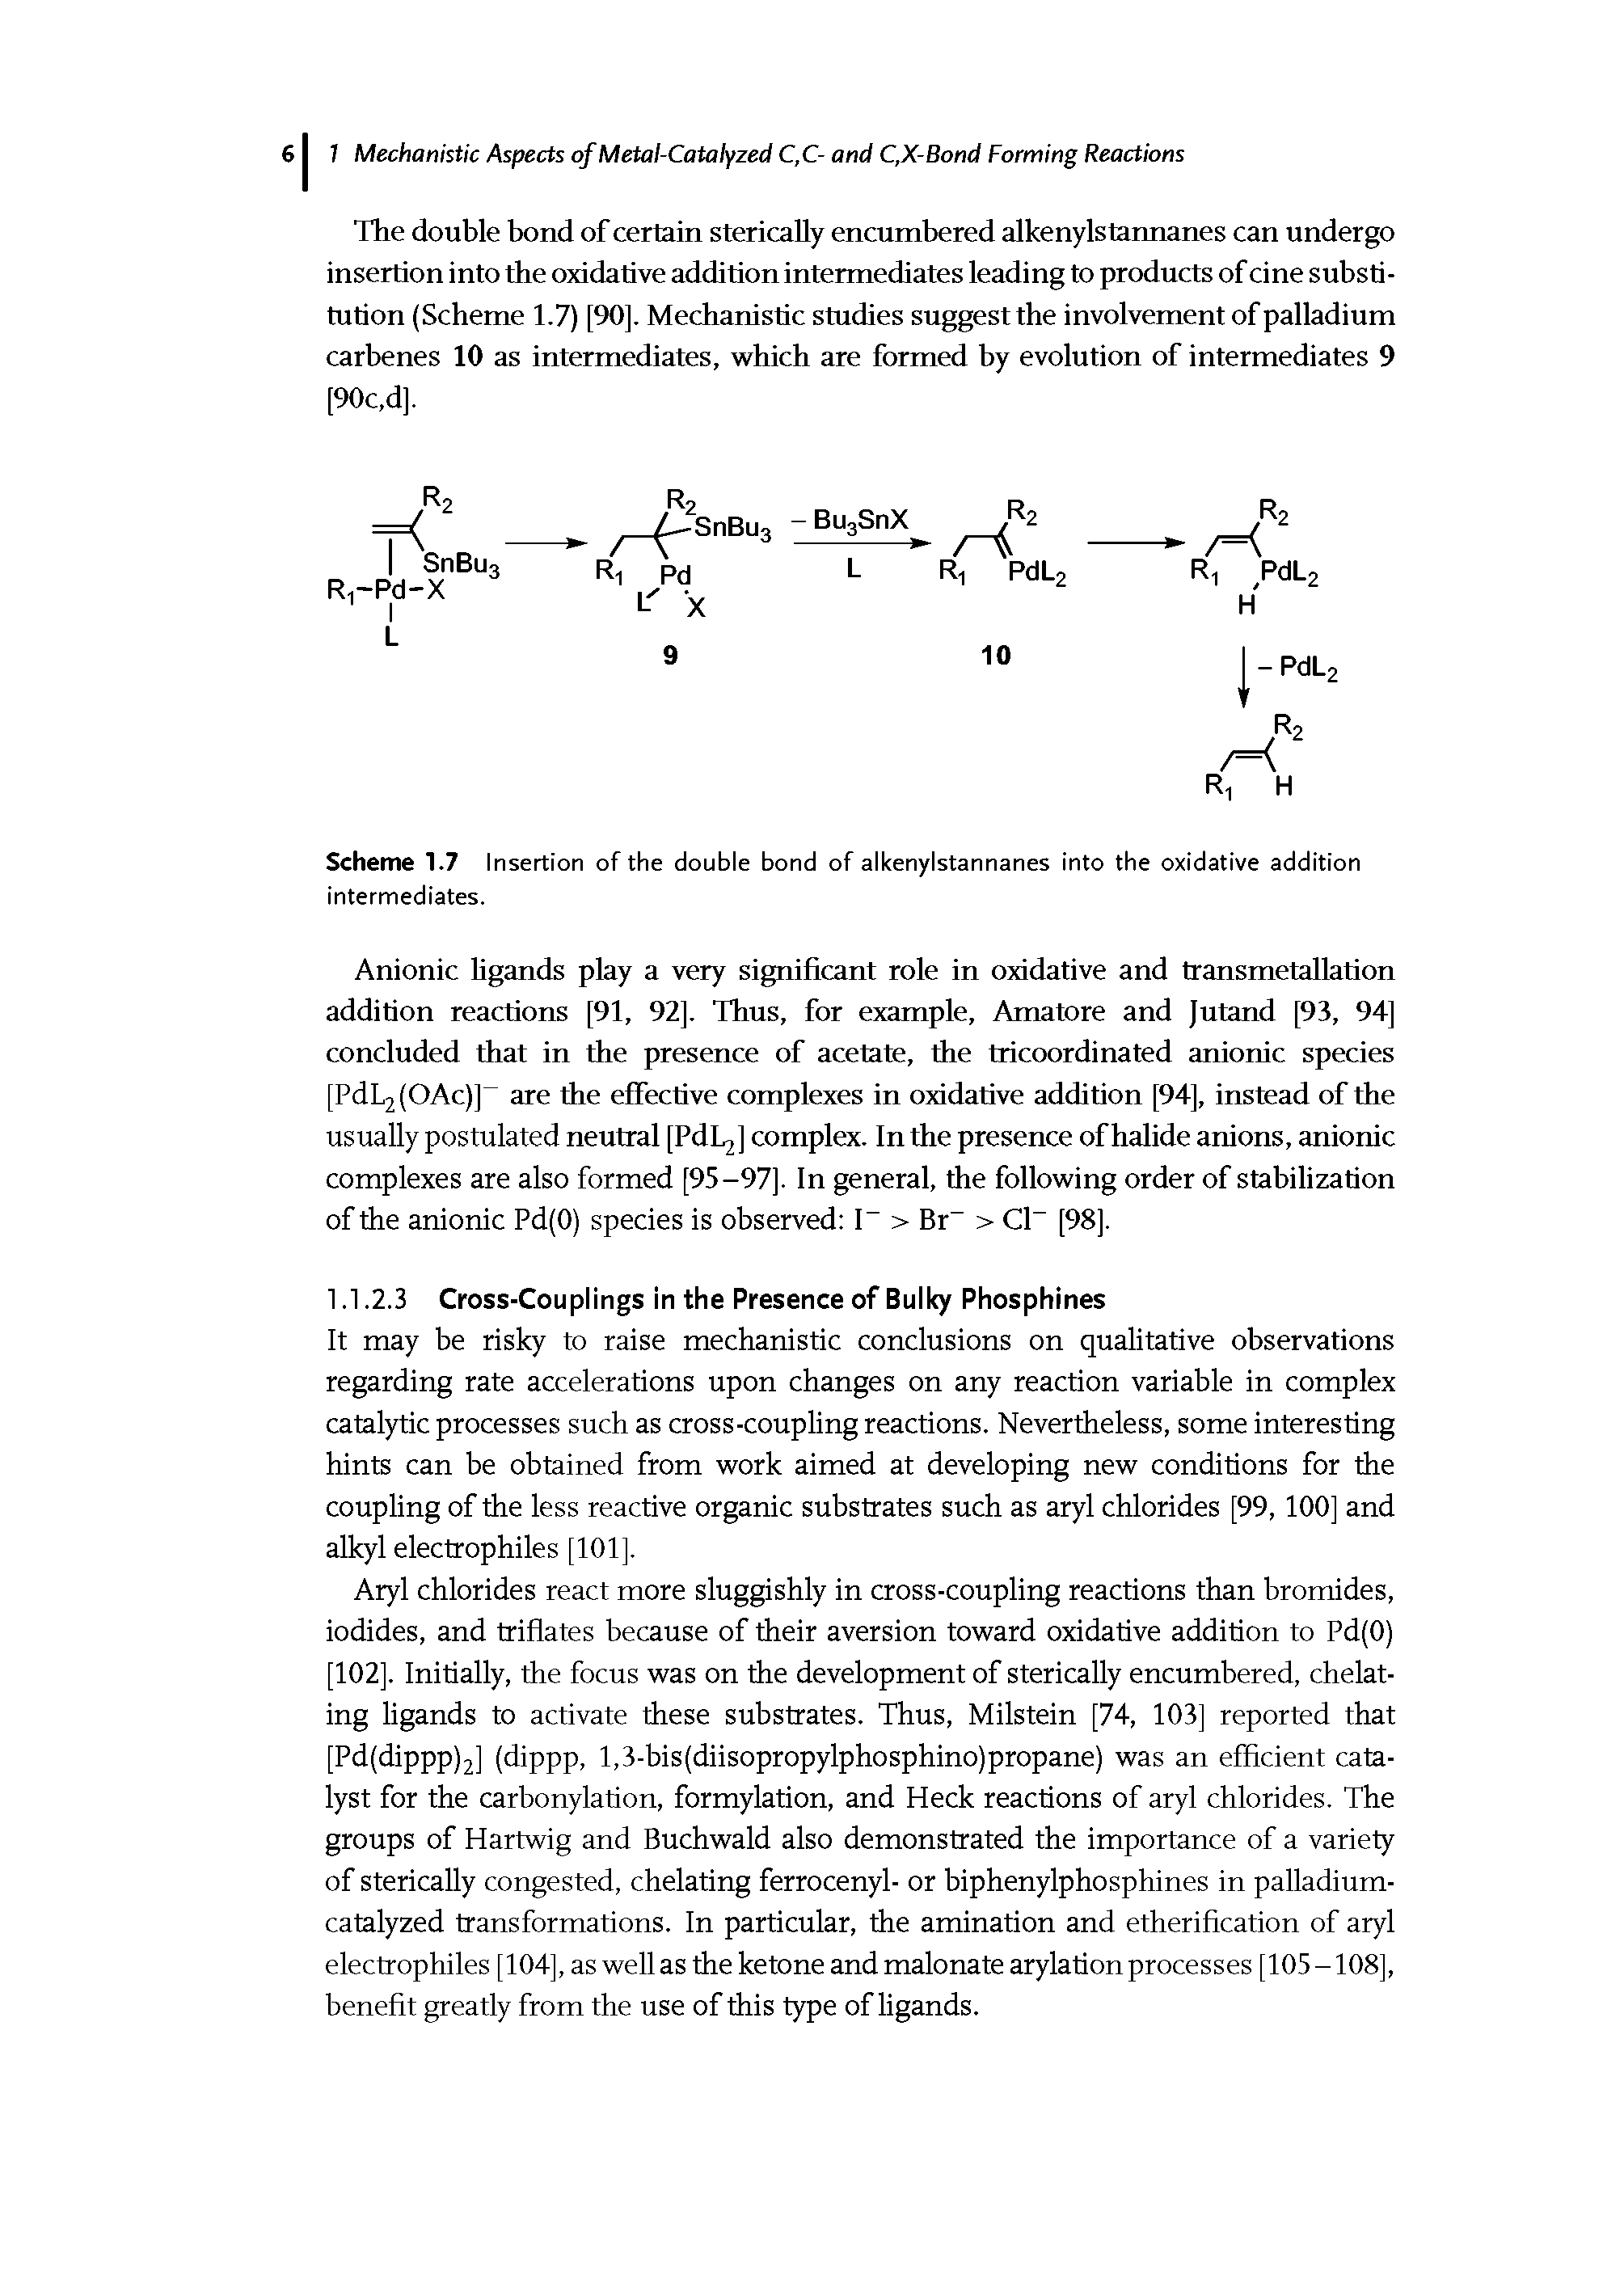 Scheme 1.7 Insertion of the double bond of alkenylstannanes into the oxidative addition intermediates.